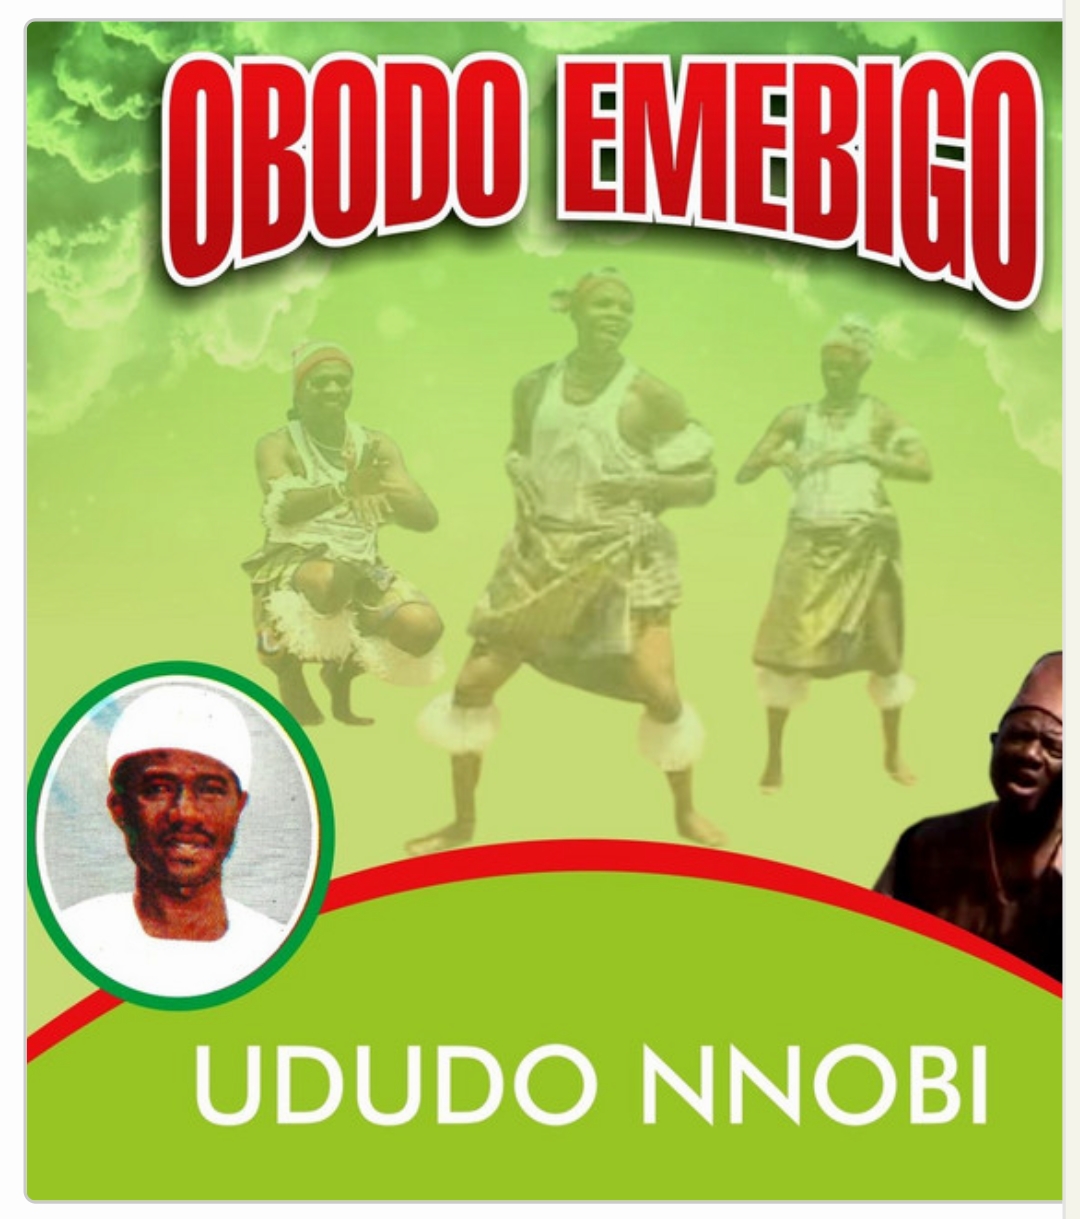 Ududo Nnobi – Obodo Emebigo